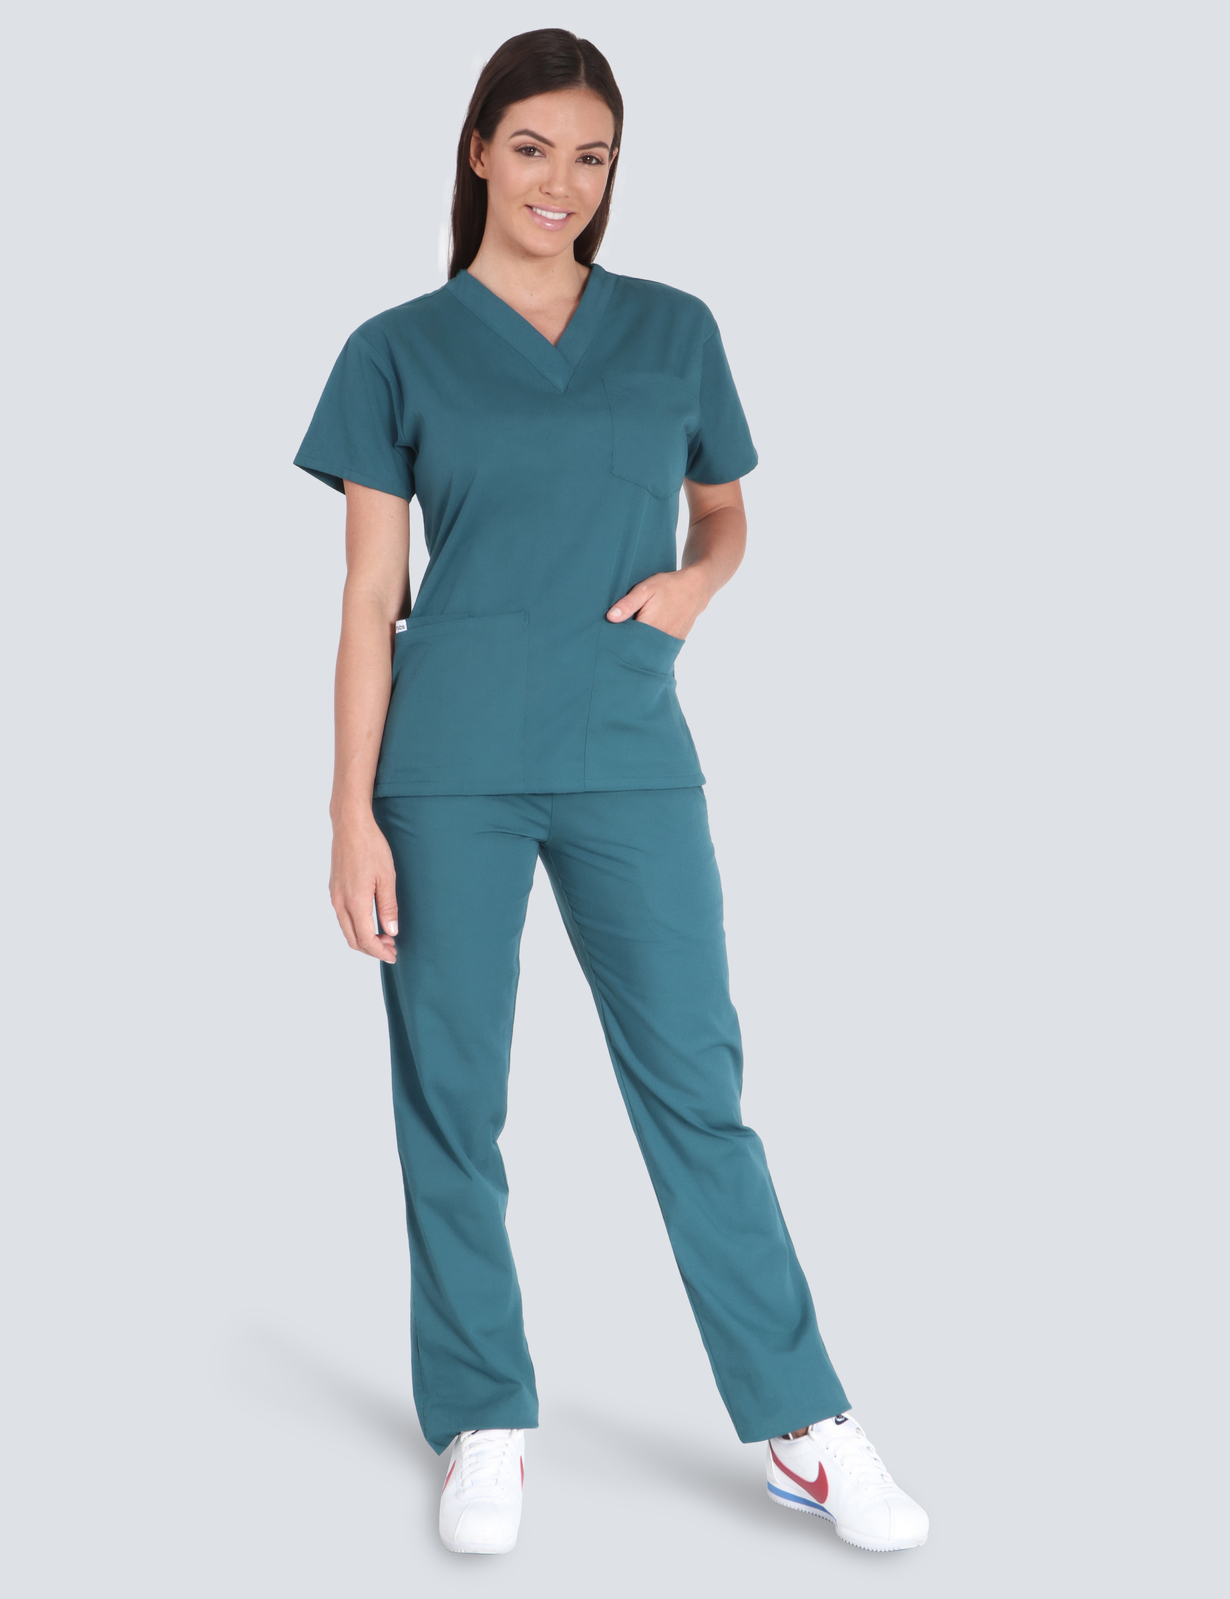 Flinders Medical Centre - Registered Nurse (4 Pocket Scrub Top and Cargo Pants in Caribbean incl Logos)